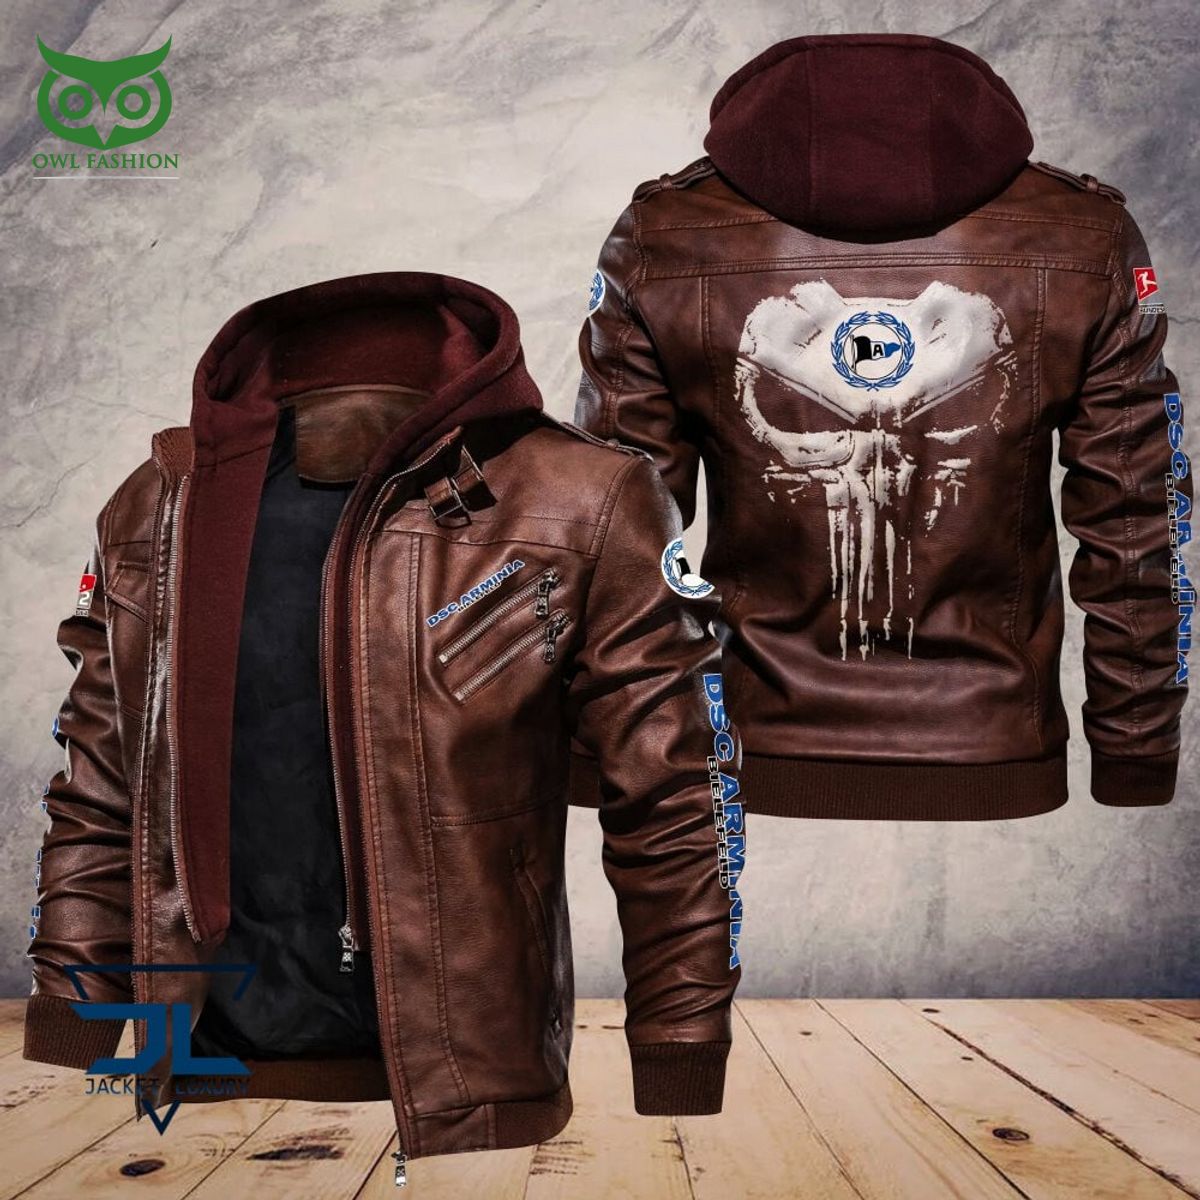 dsc arminia bielefeld bundesliga germany league 2d leather jacket 2 kYl7A